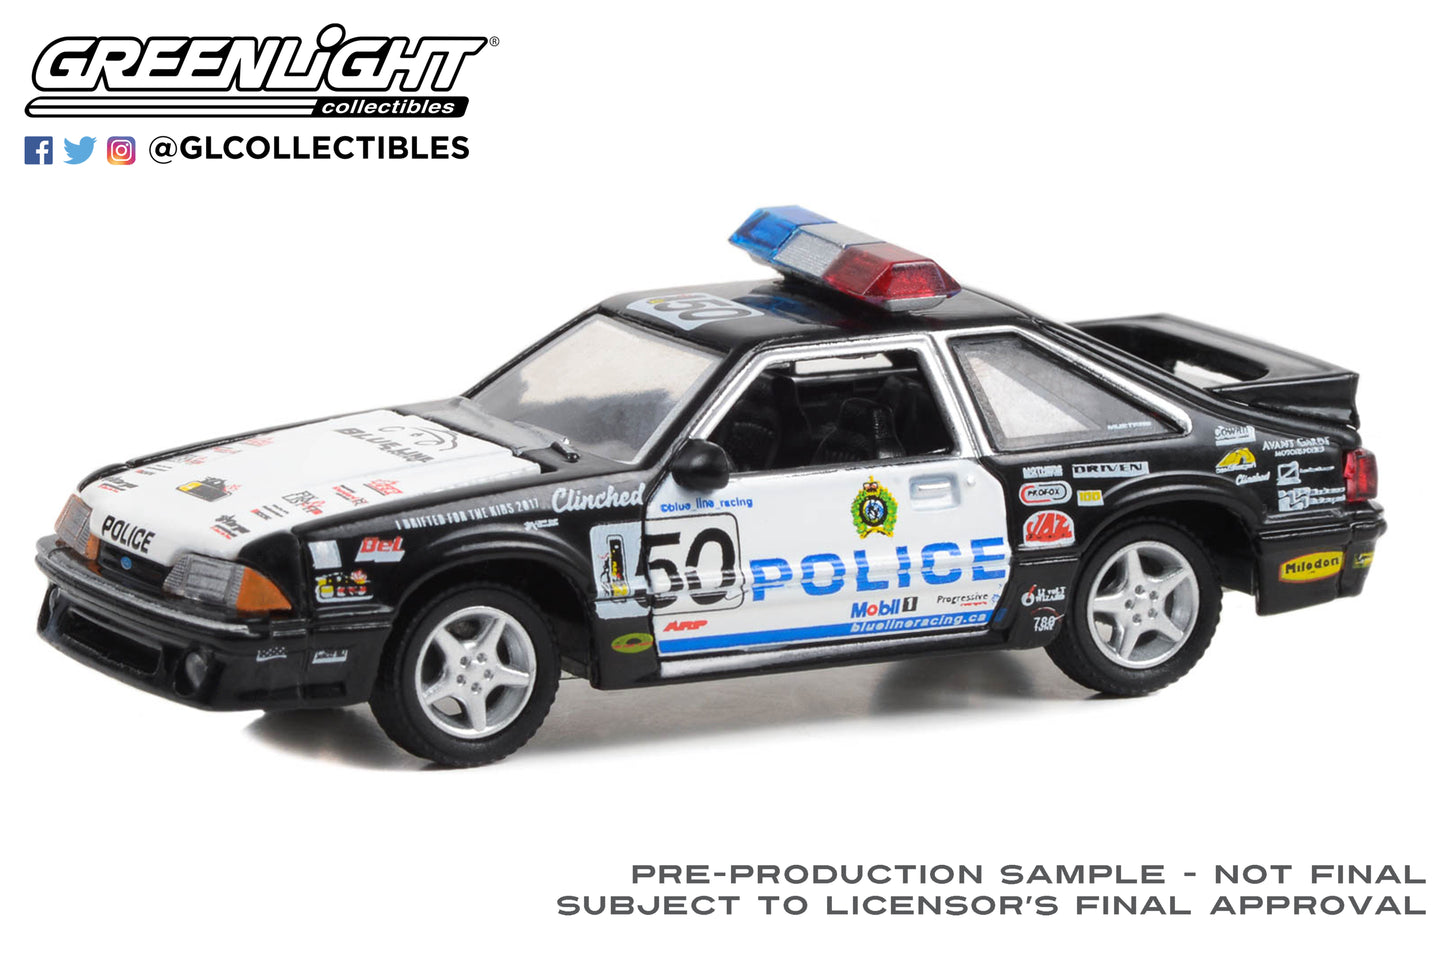 GreenLight 1:64 1993 Ford Mustang LX - Edmonton Police, Edmonton, Alberta, Canada - Blue Line Racing 25 Years 30368